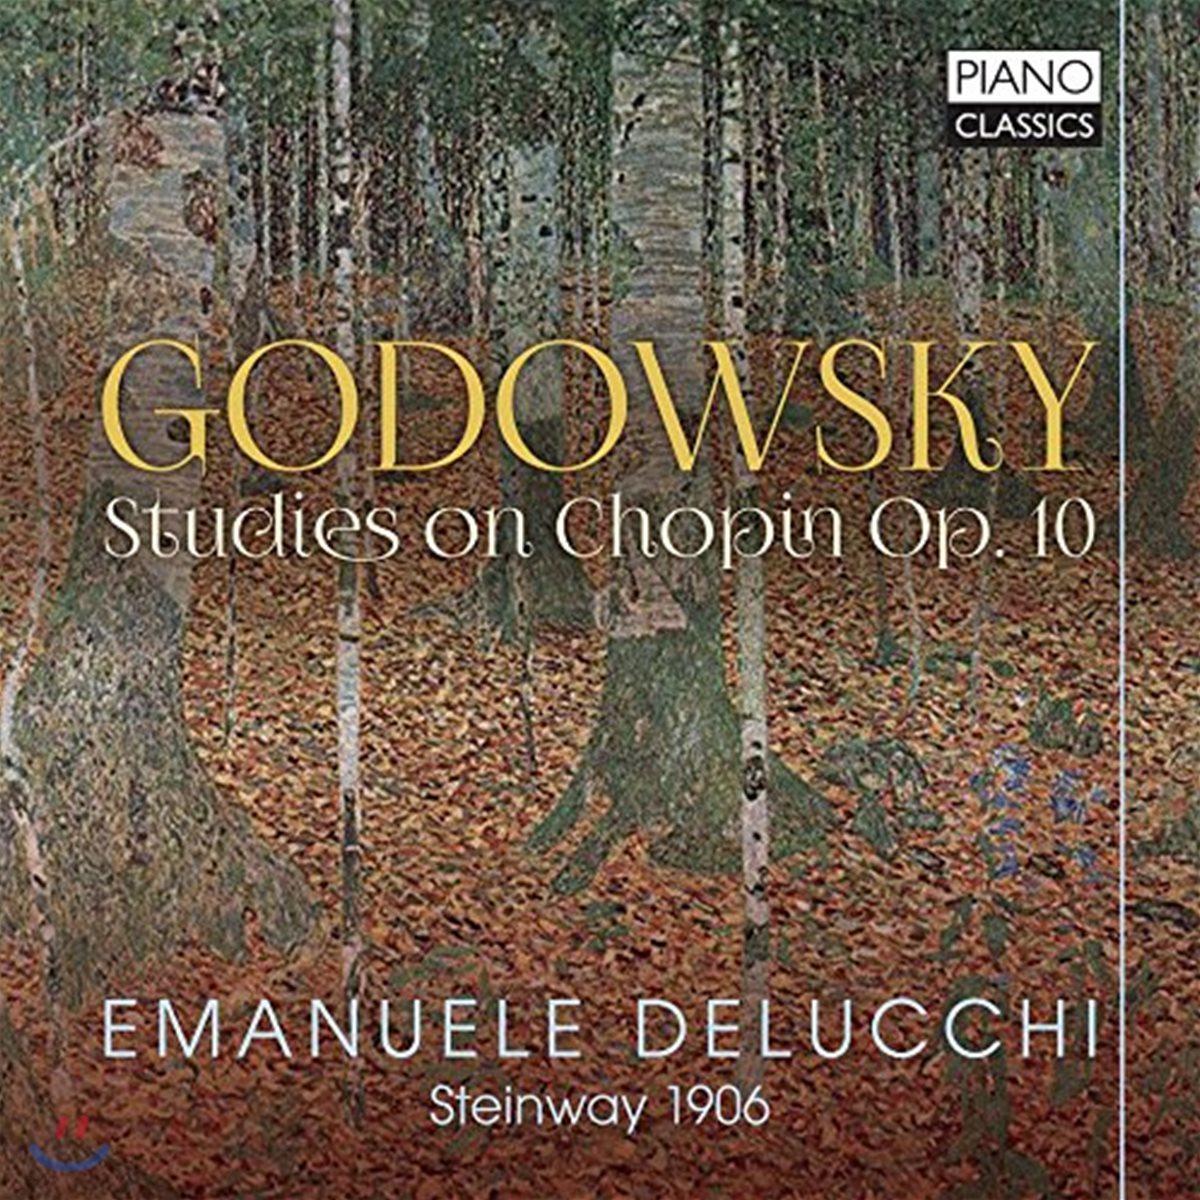 Emanuele Delucchi 고도프스키: 왼손을 위한 쇼팽 연습곡에 대한 연구집 - 엠마누엘 델루치 (Leopold Godowsky: Studies on Chopin's Etudes Op.10, for the left hand alone)